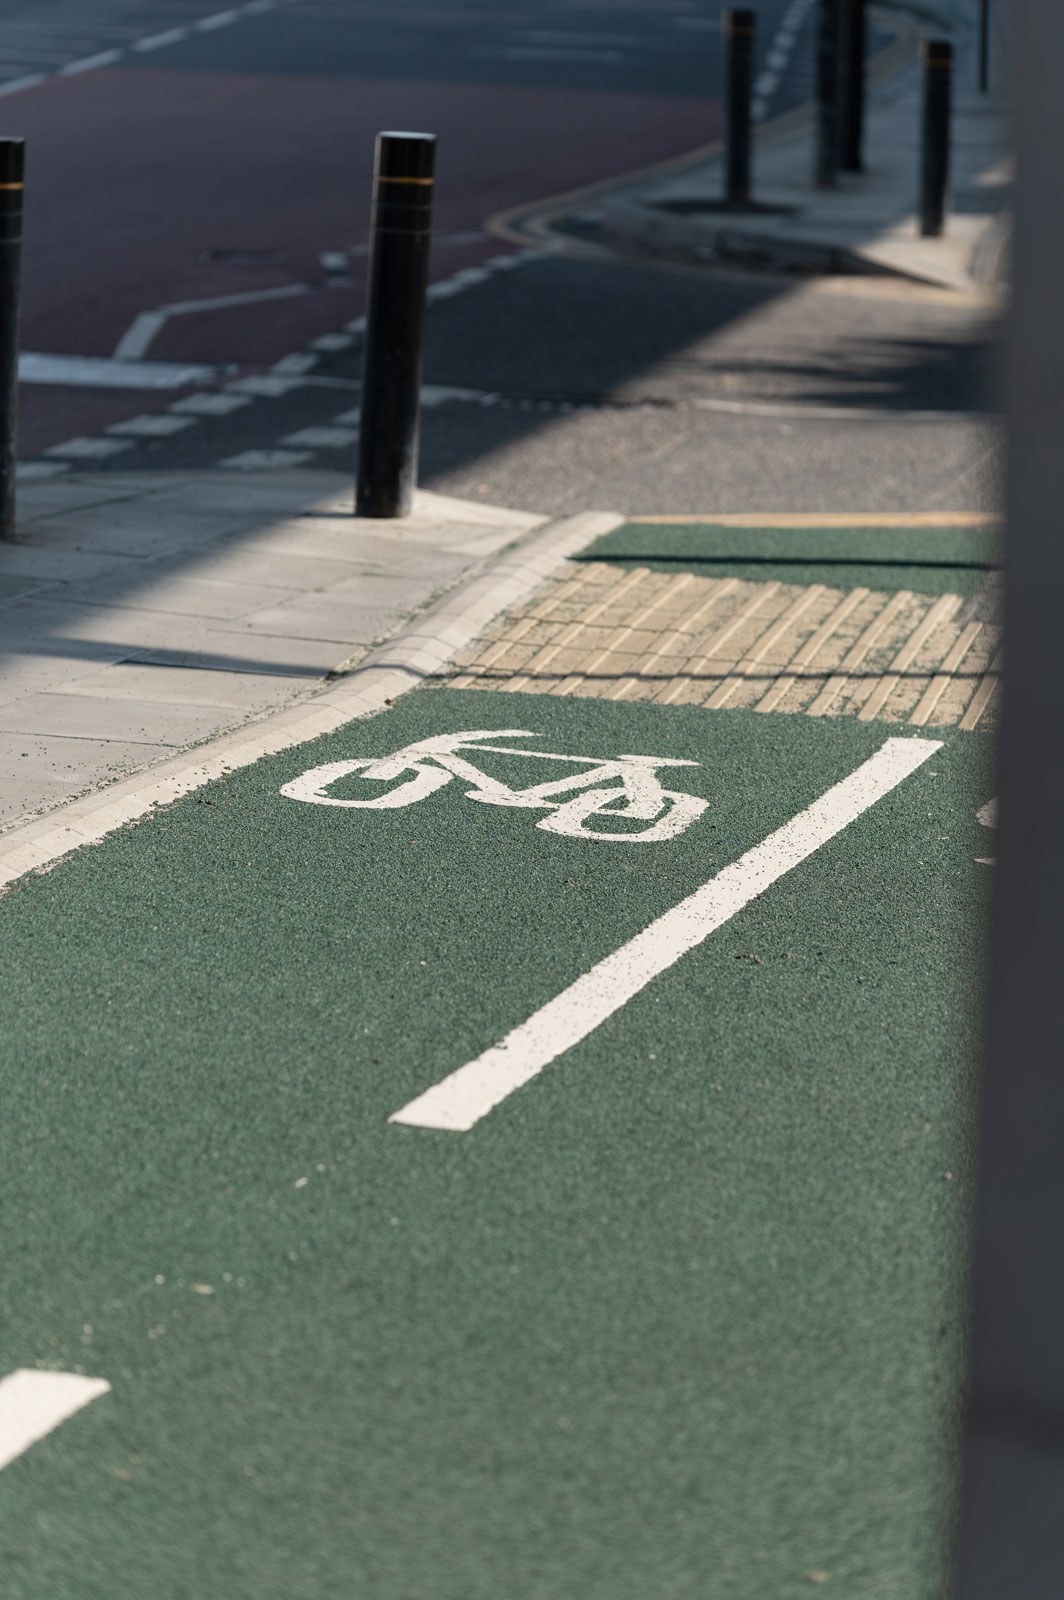 A green bike lane with a painted bike symbol